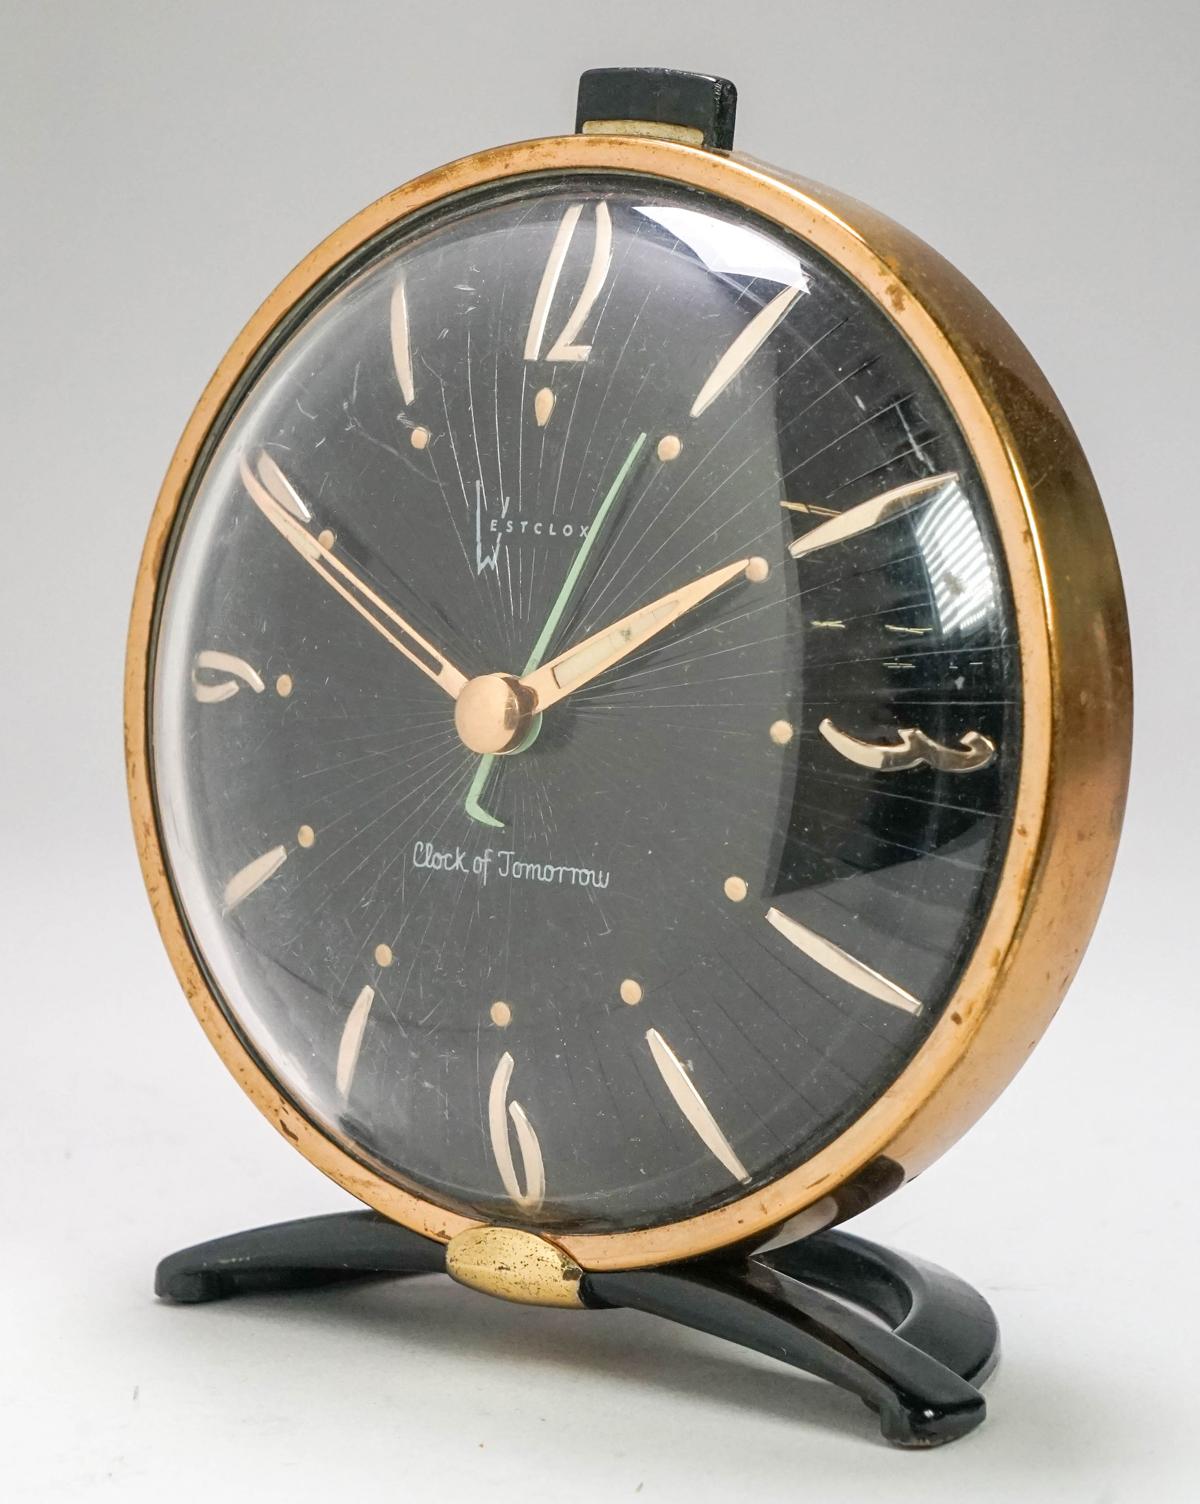 "Clock of Tomorrow" by Westclox, Ca. 1955-1959